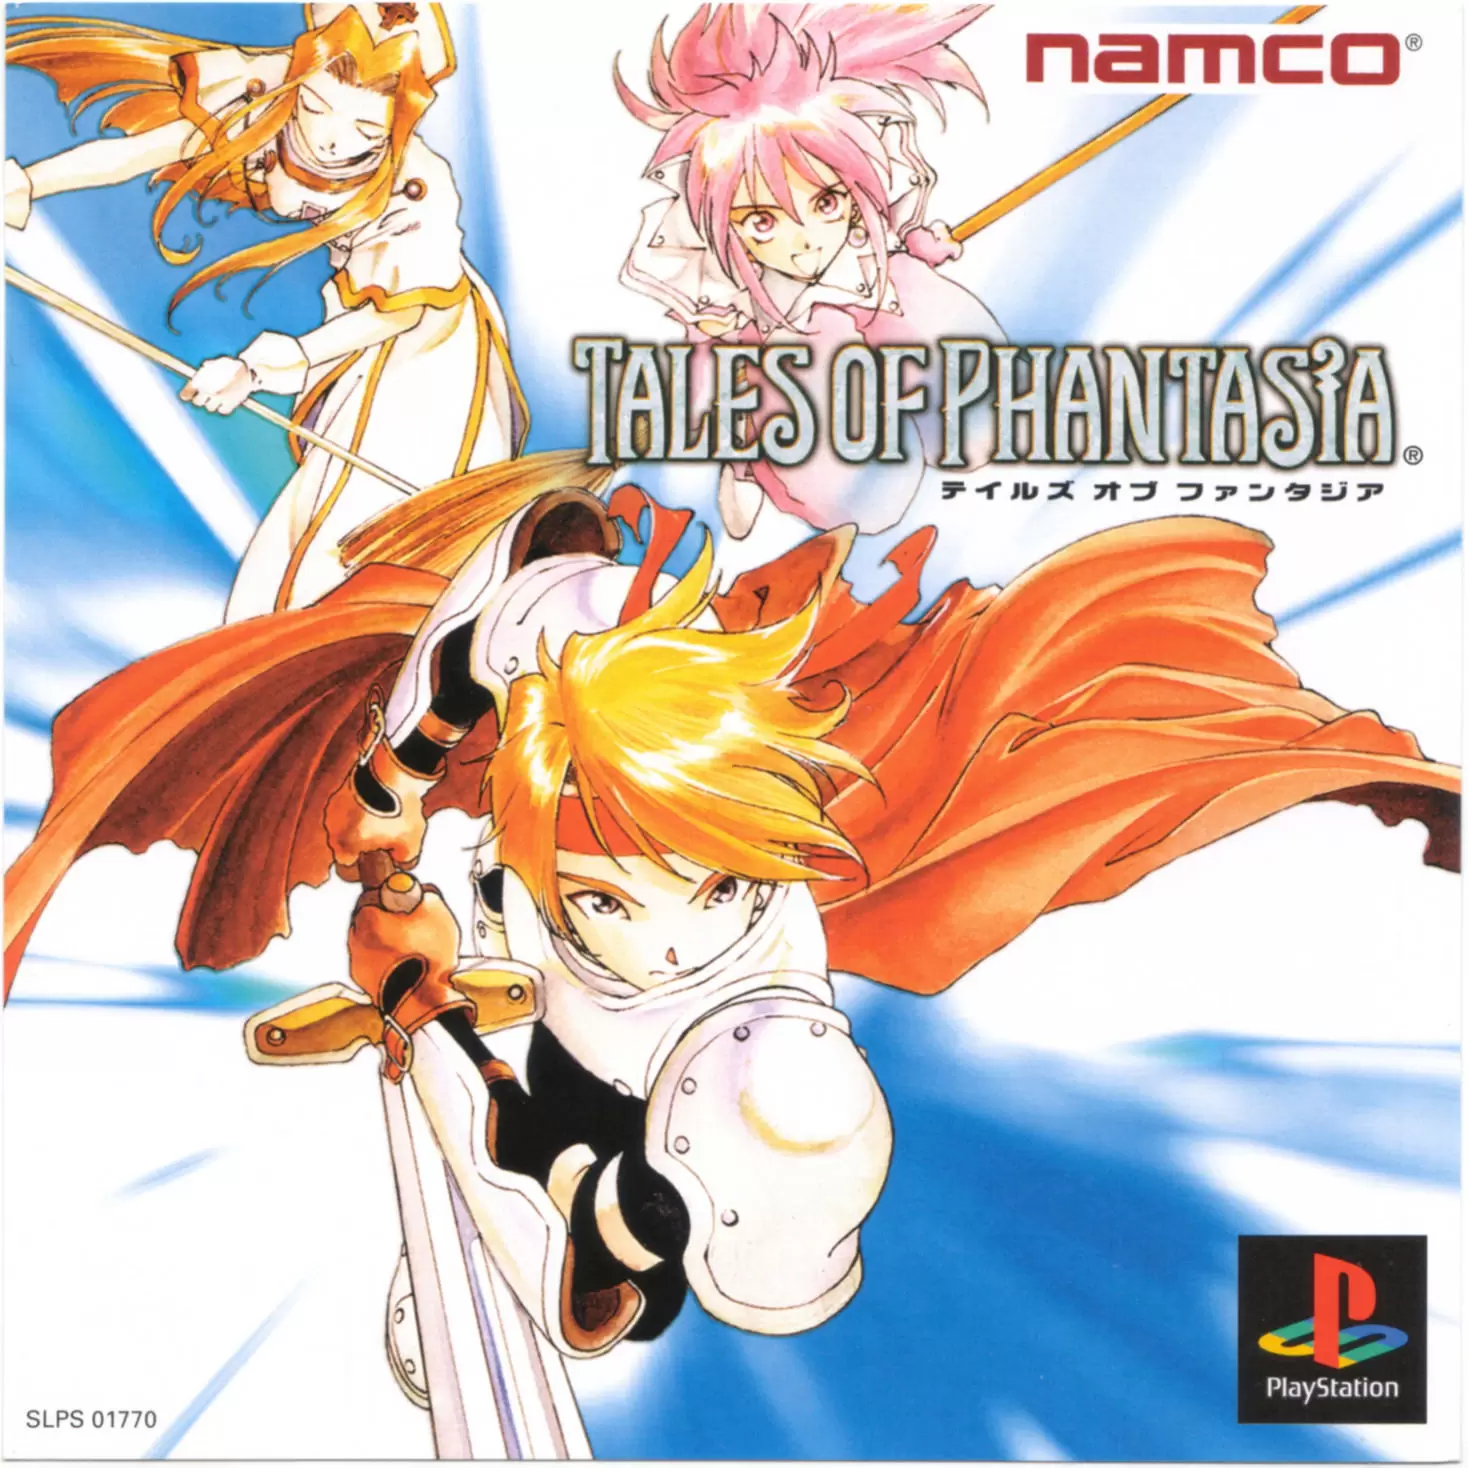 Jeux Playstation PS1 - Tales of Phantasia